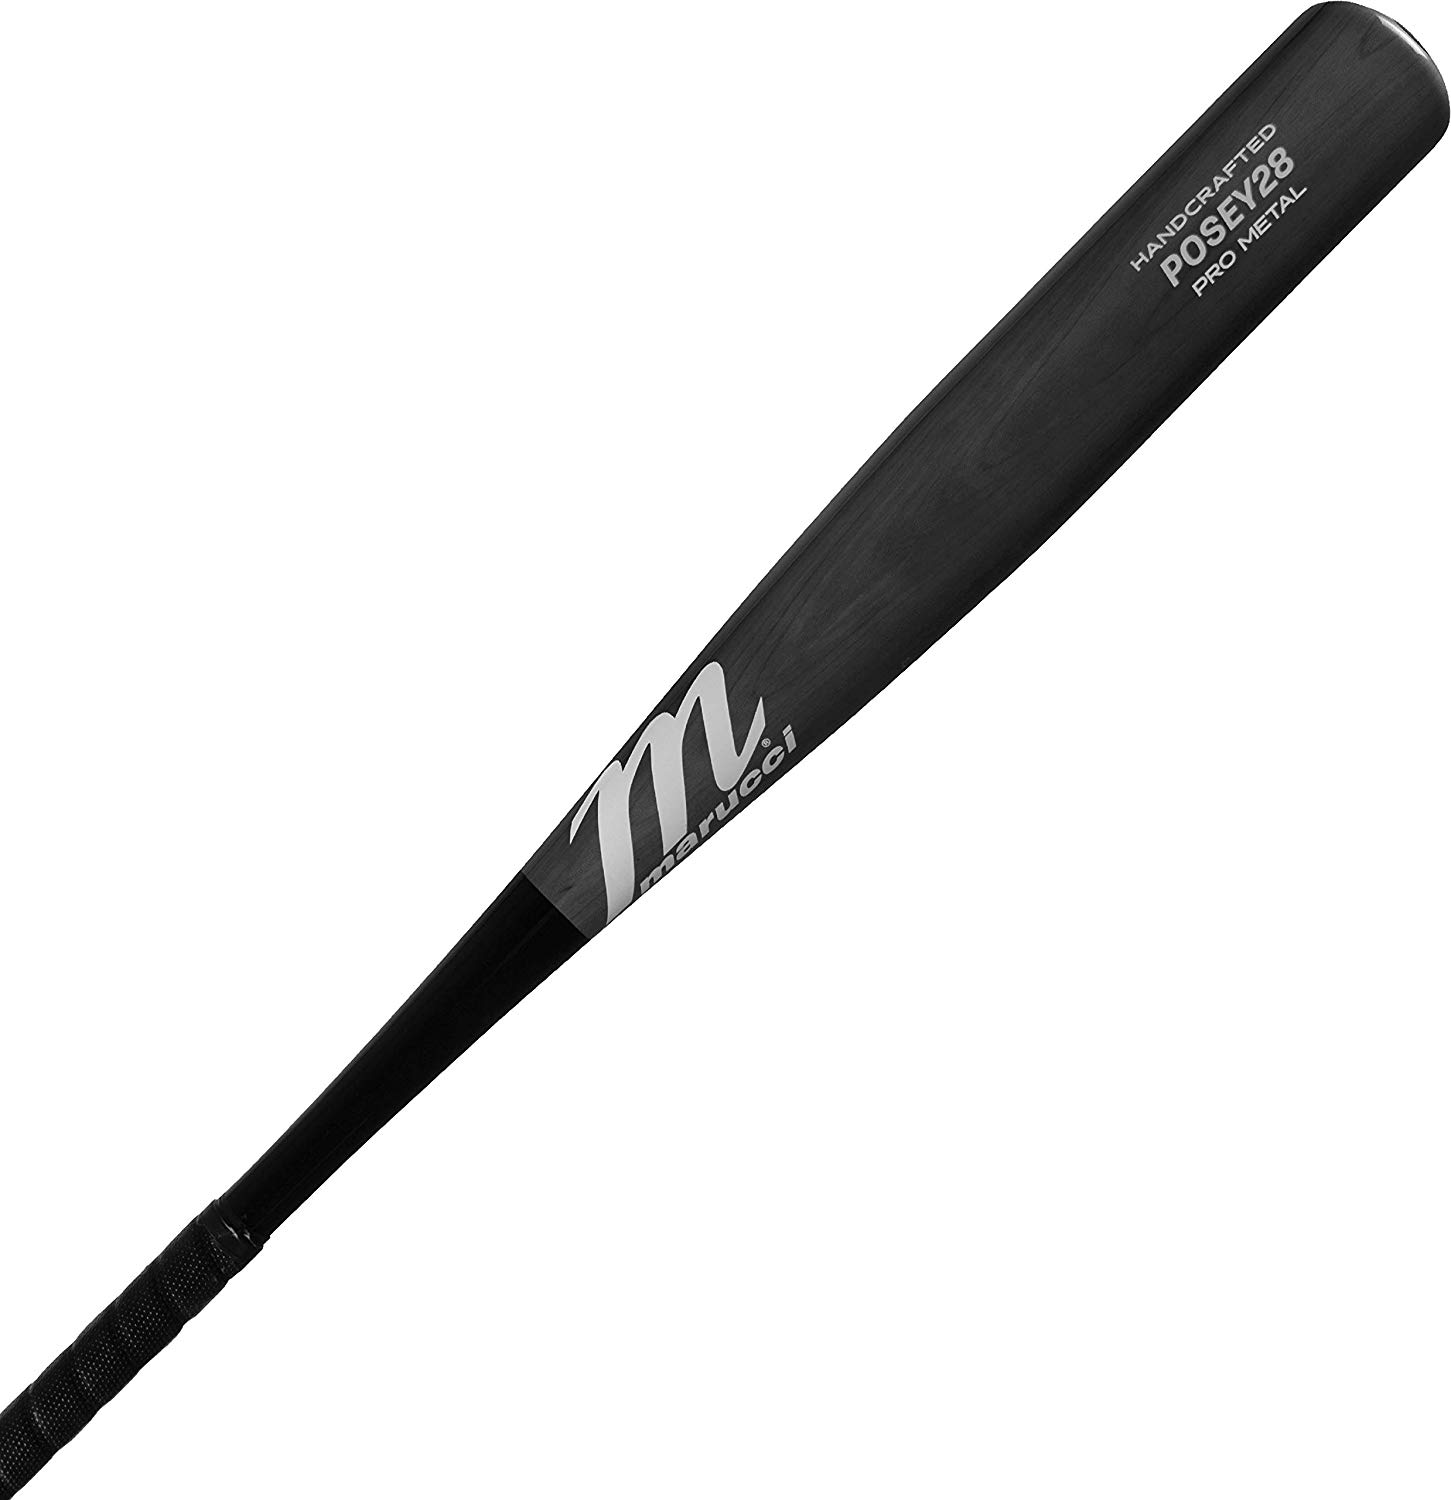 marucci-posey28-pro-metal-bbcor-baseball-bat-mcbp28s-32-inch-29-oz MCBP28S-3229 Marucci 849817095584 AZ105 alloy the strongest aluminum on the Marucci bat line allows